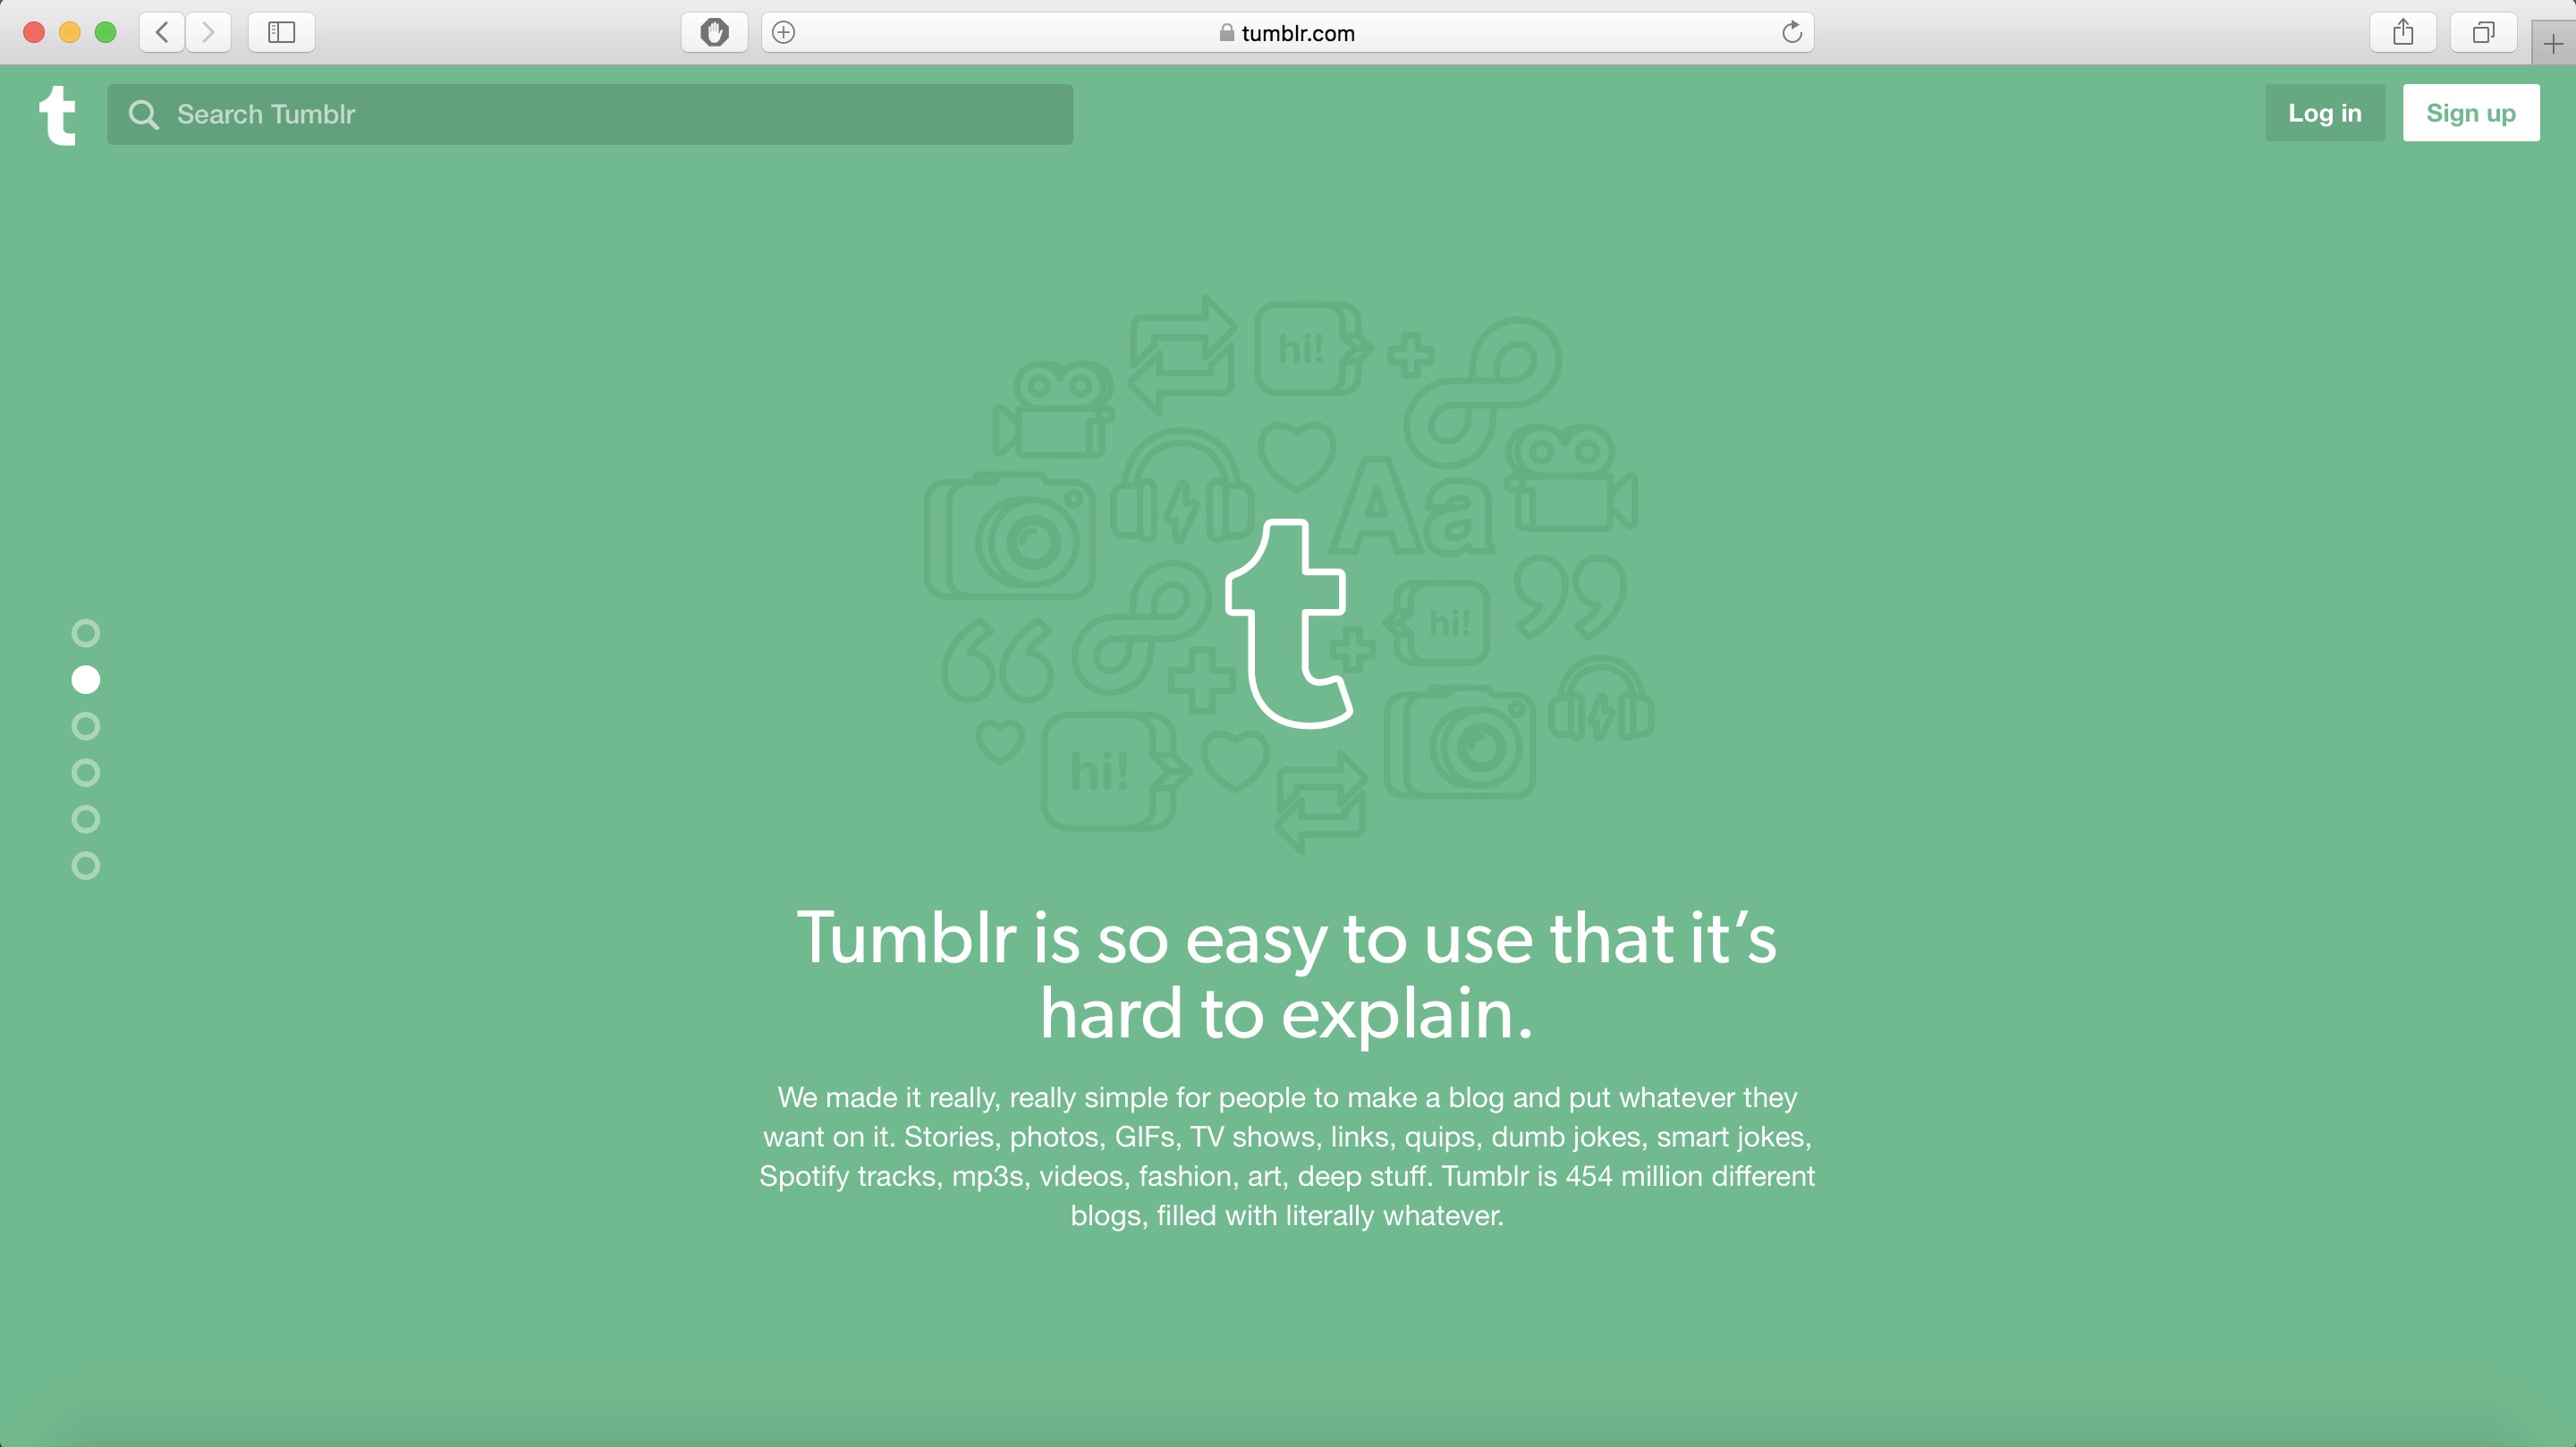 Tumblr homepage